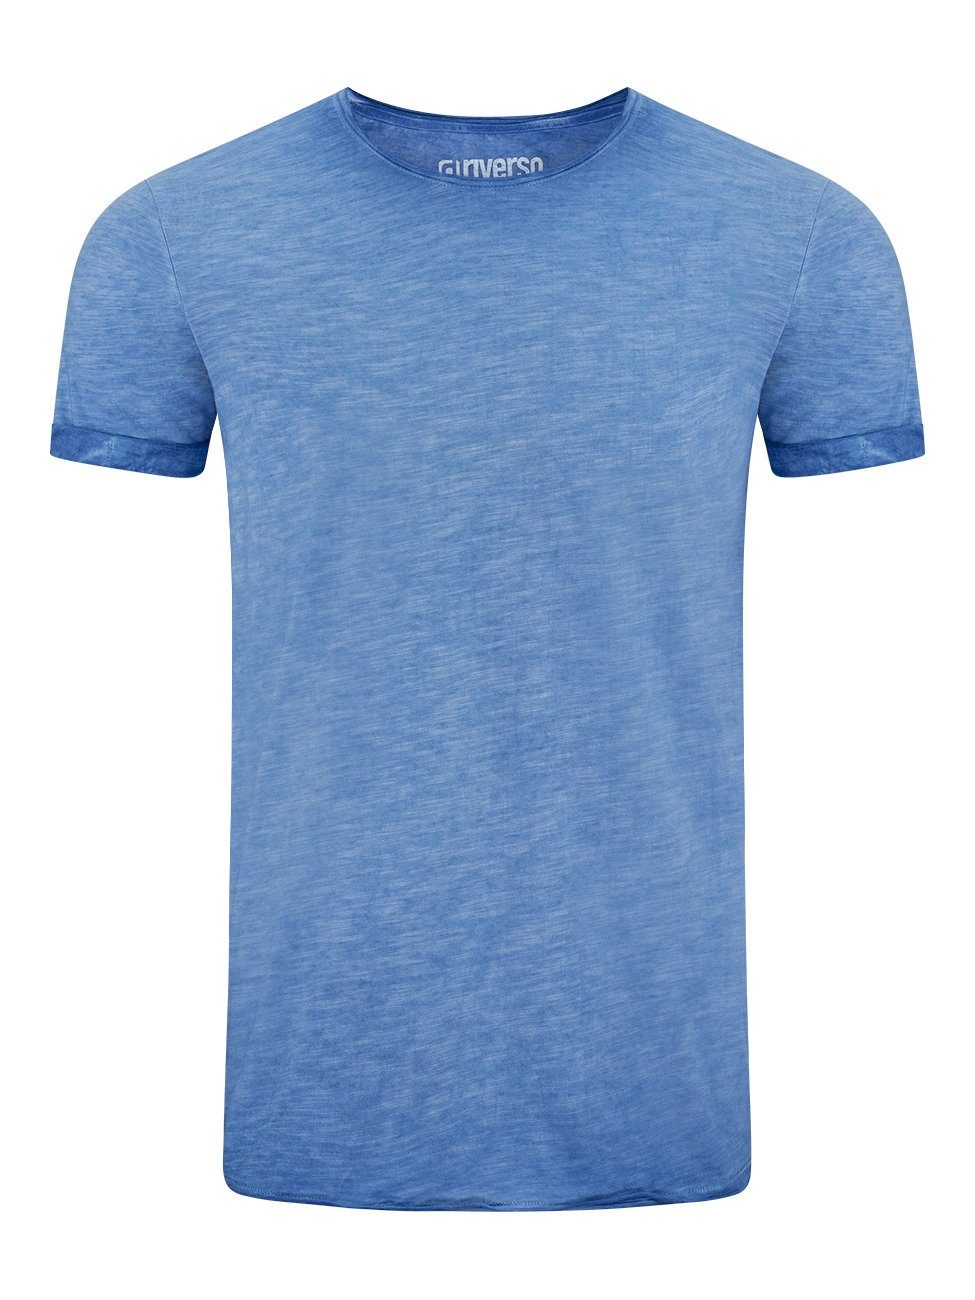 RIVMatteo Rundhalsausschnitt Baumwolle mit Fit Shirt Basic Herren T-Shirt (4-tlg) 100% Shirt 3 Pack riverso Kurzarm aus Tee Regular